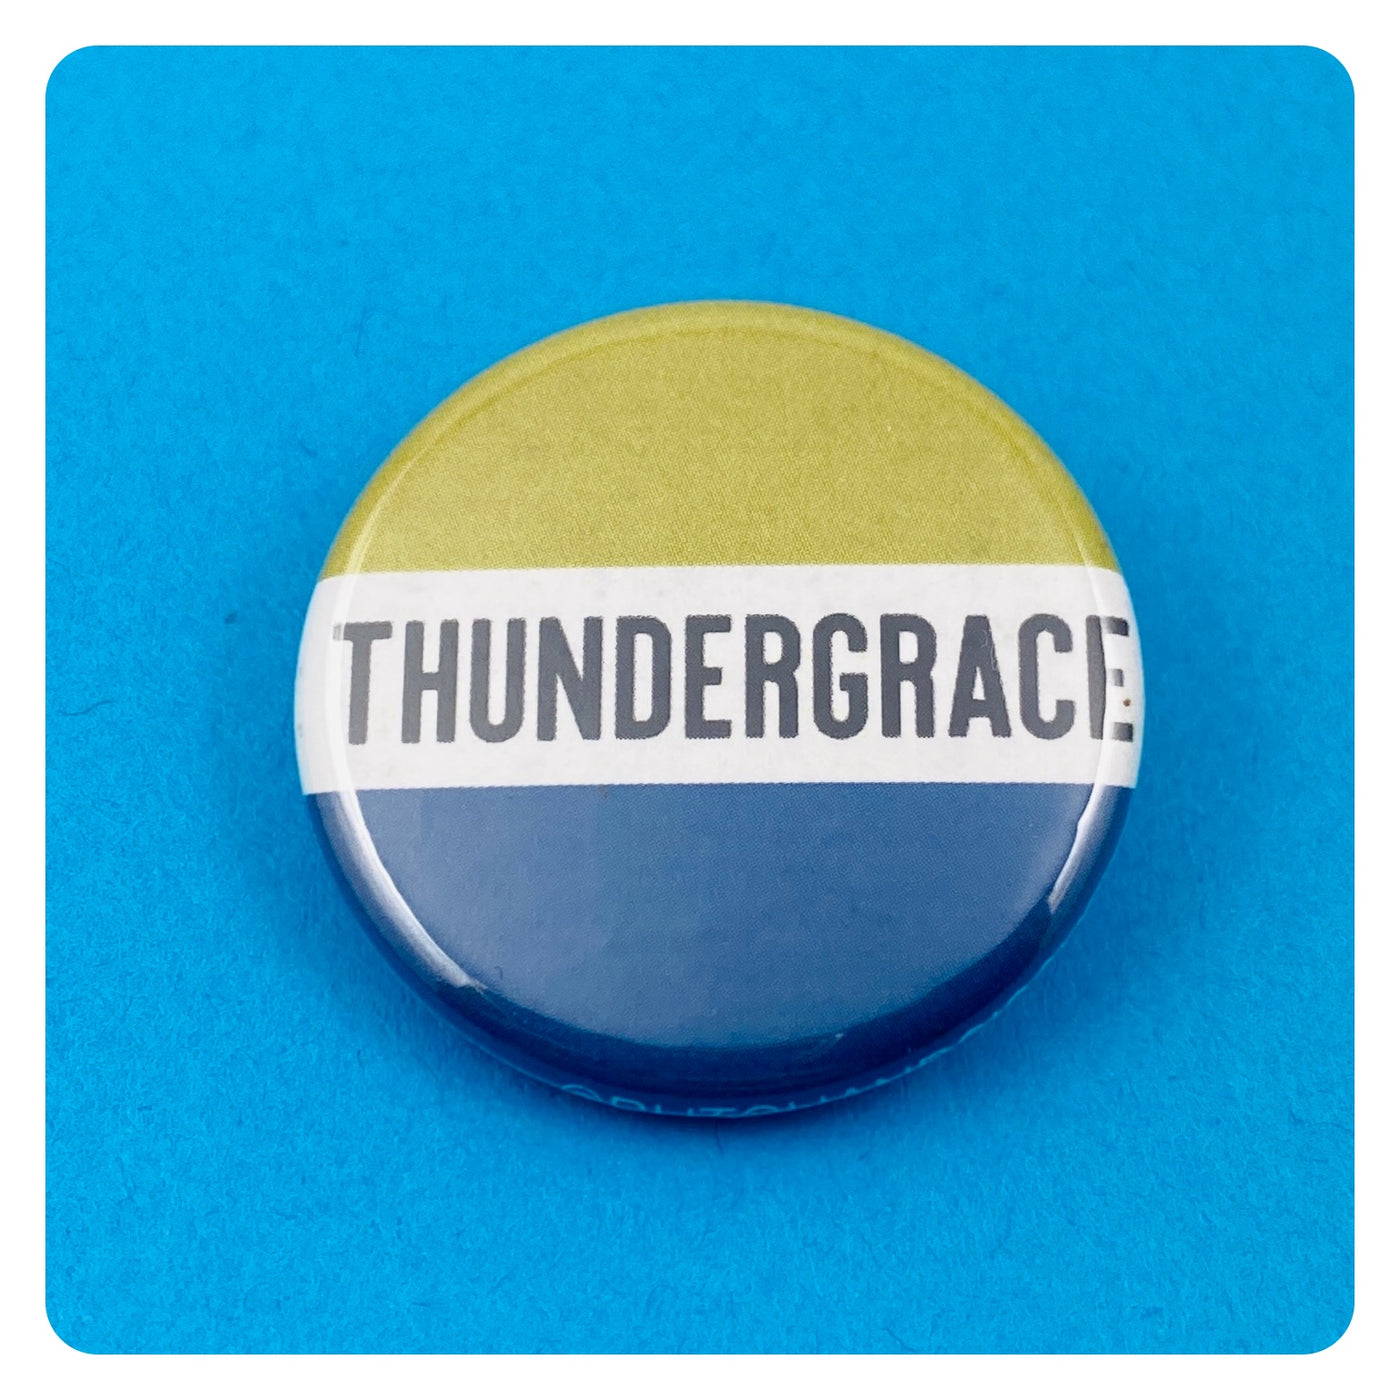 Thundergrace Ship Button